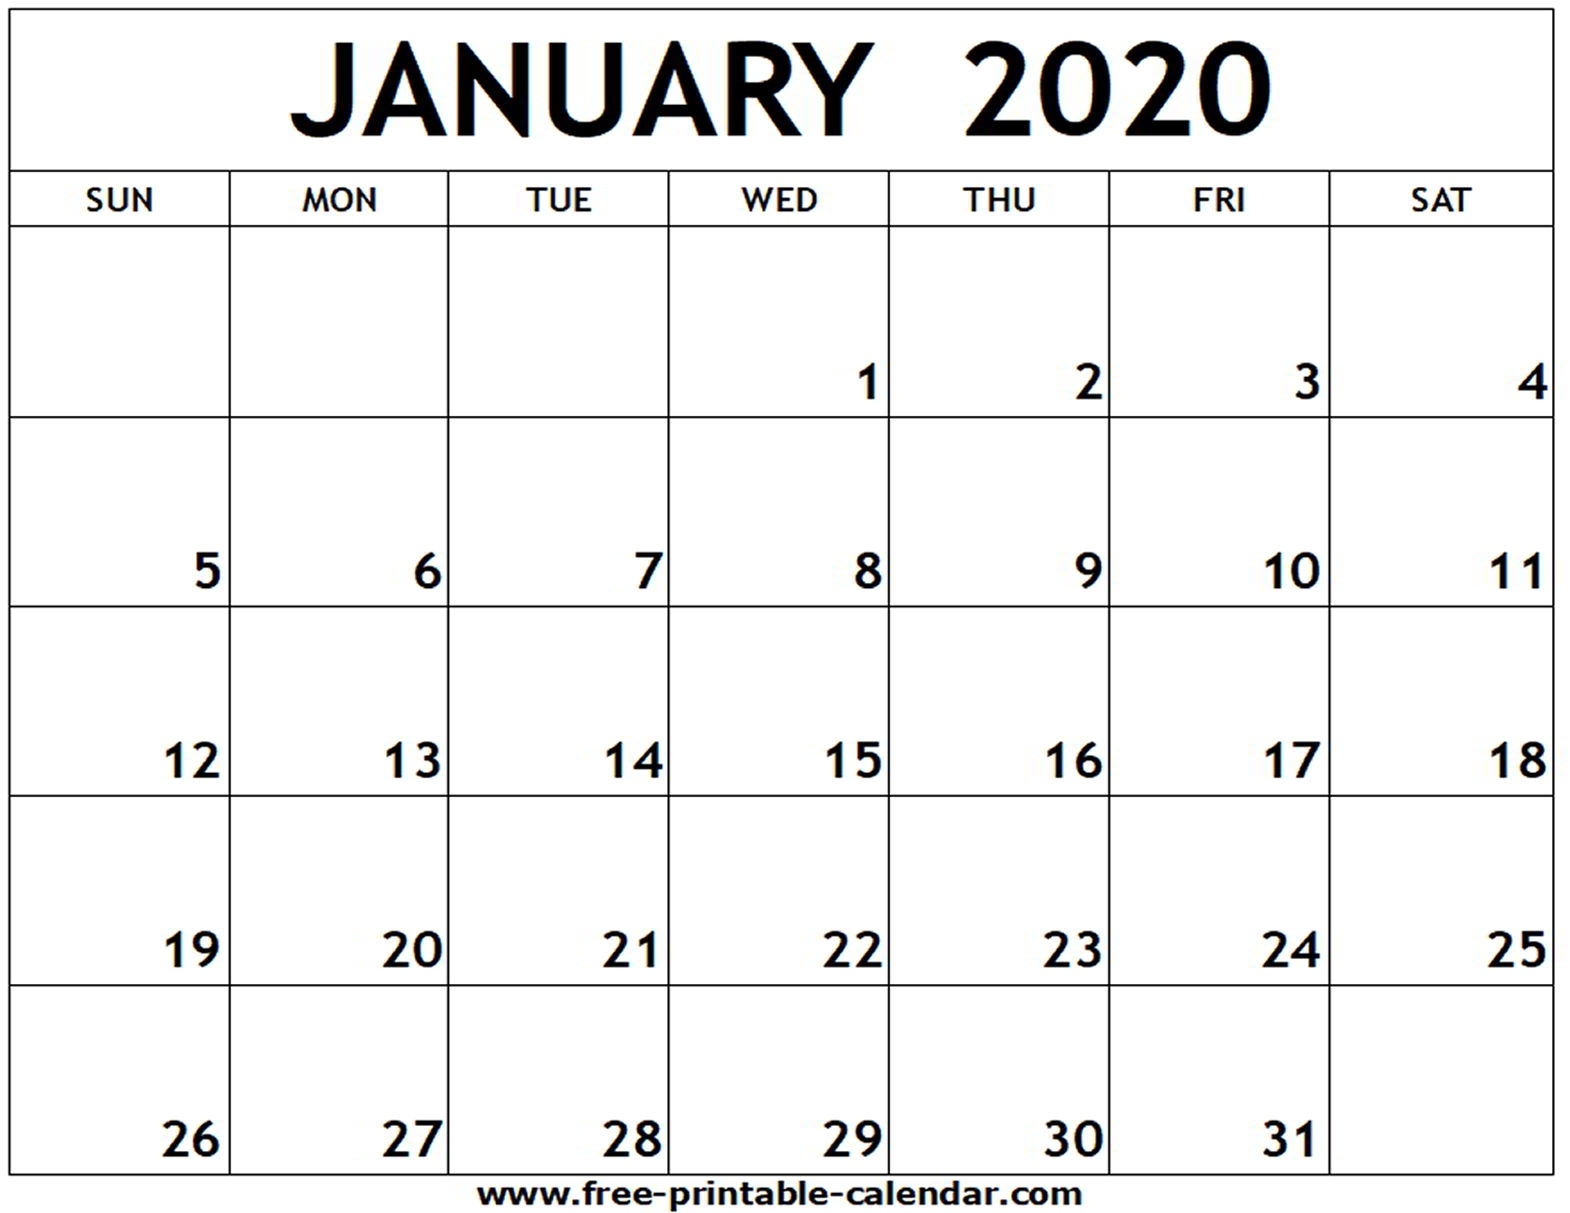 January 2020 Printable Calendar - Free-Printable-Calendar Perky 2020 Calendar To Print